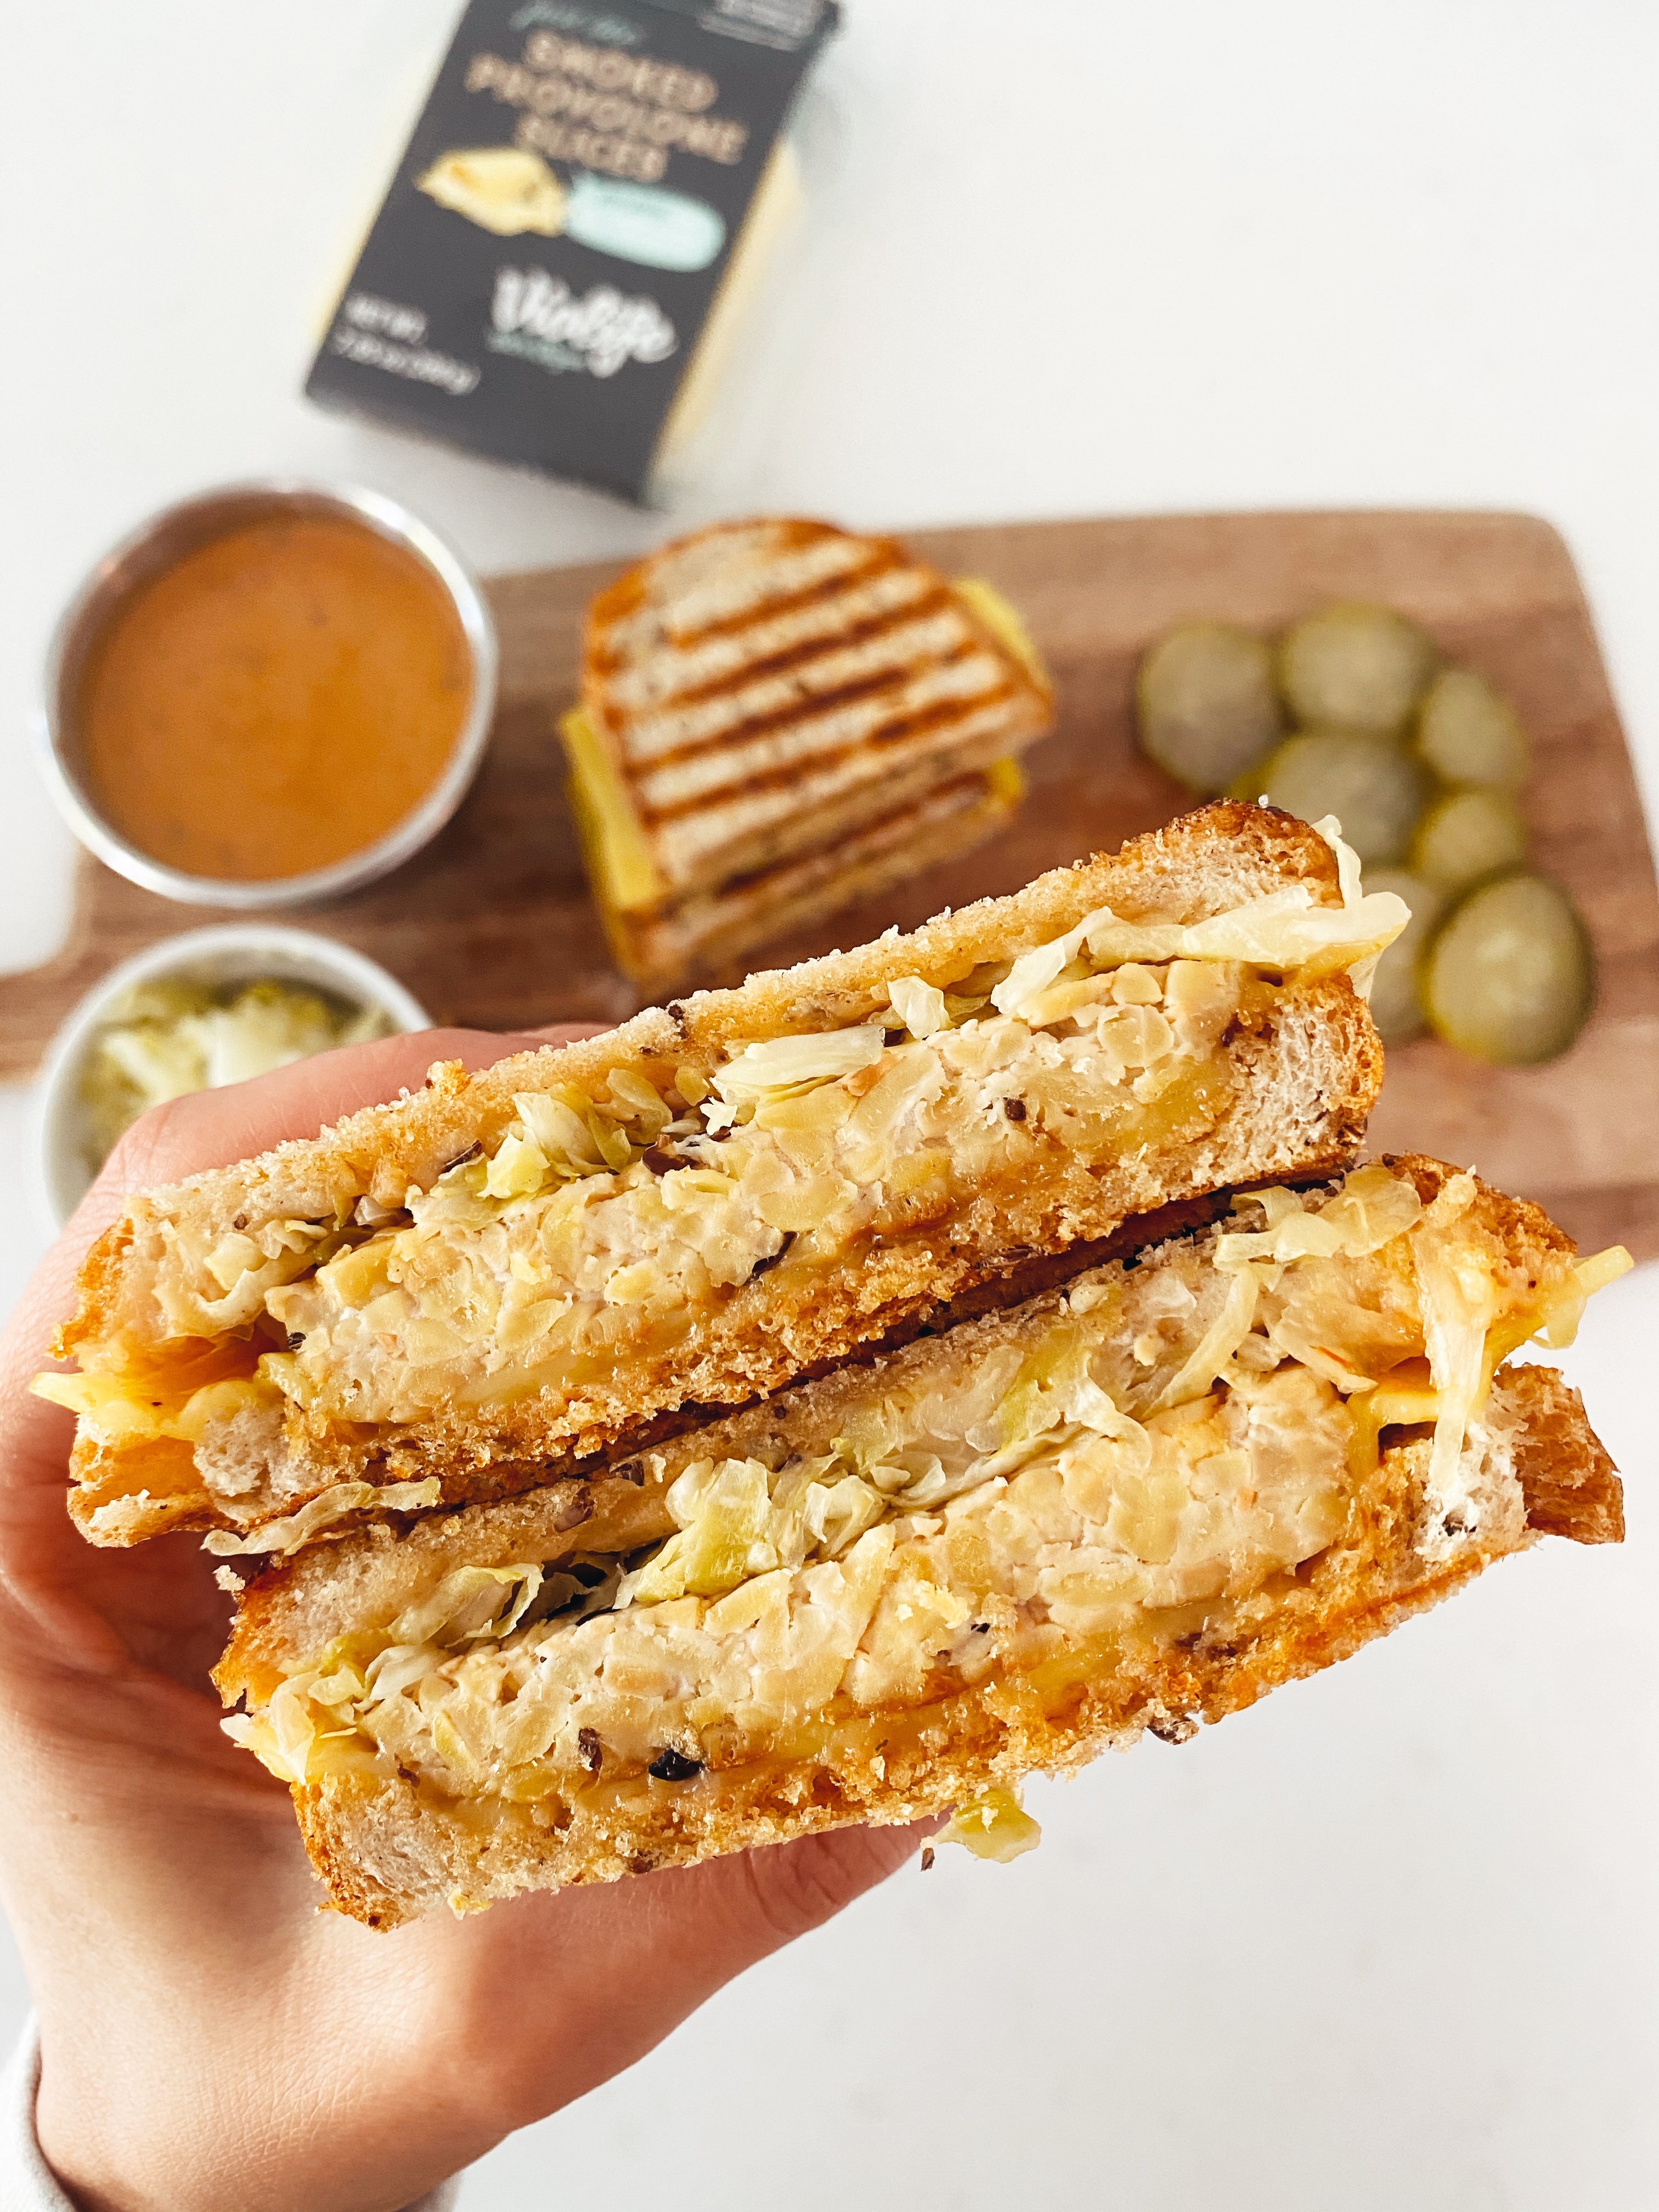 violife1 - The Best Vegan Reuben Sandwich!